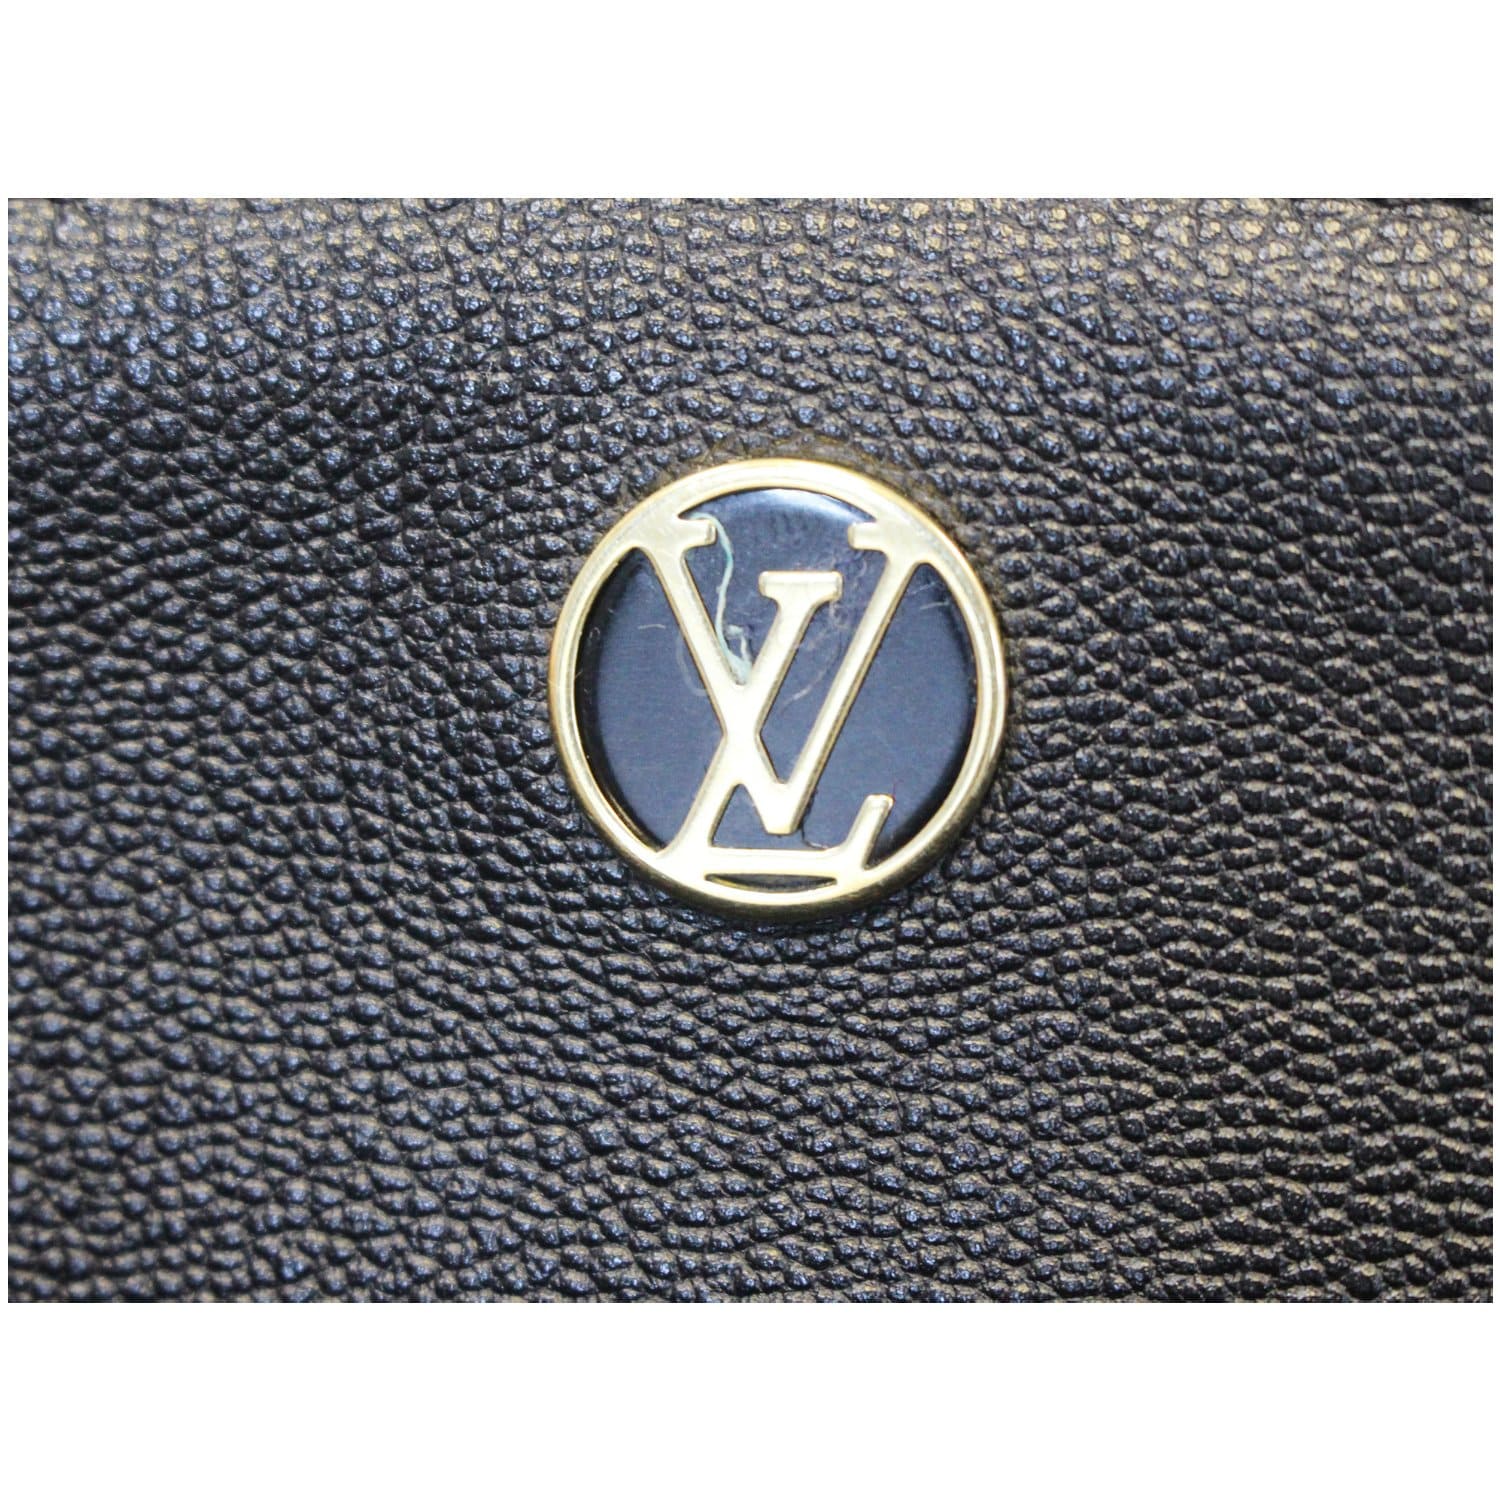 Black Louis-Vuitton Florine Tote Bag Canvas Leather with Strap